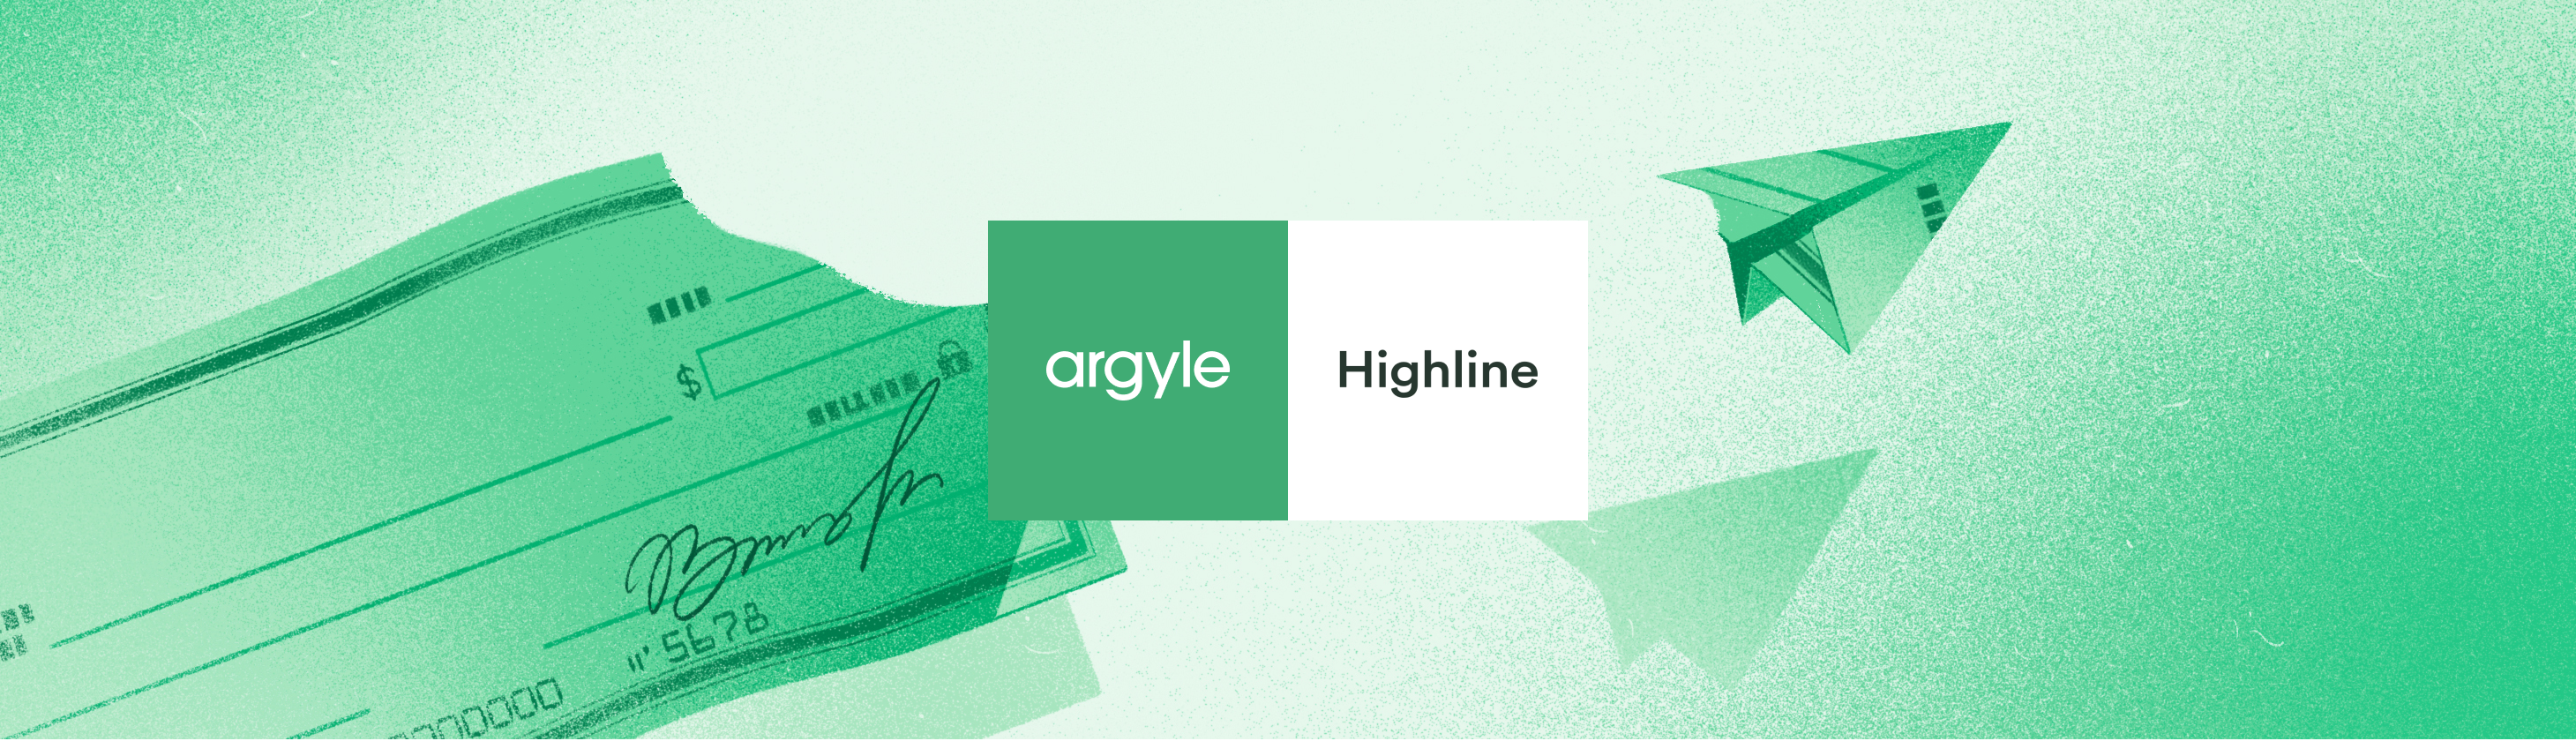 Argyle and Highline